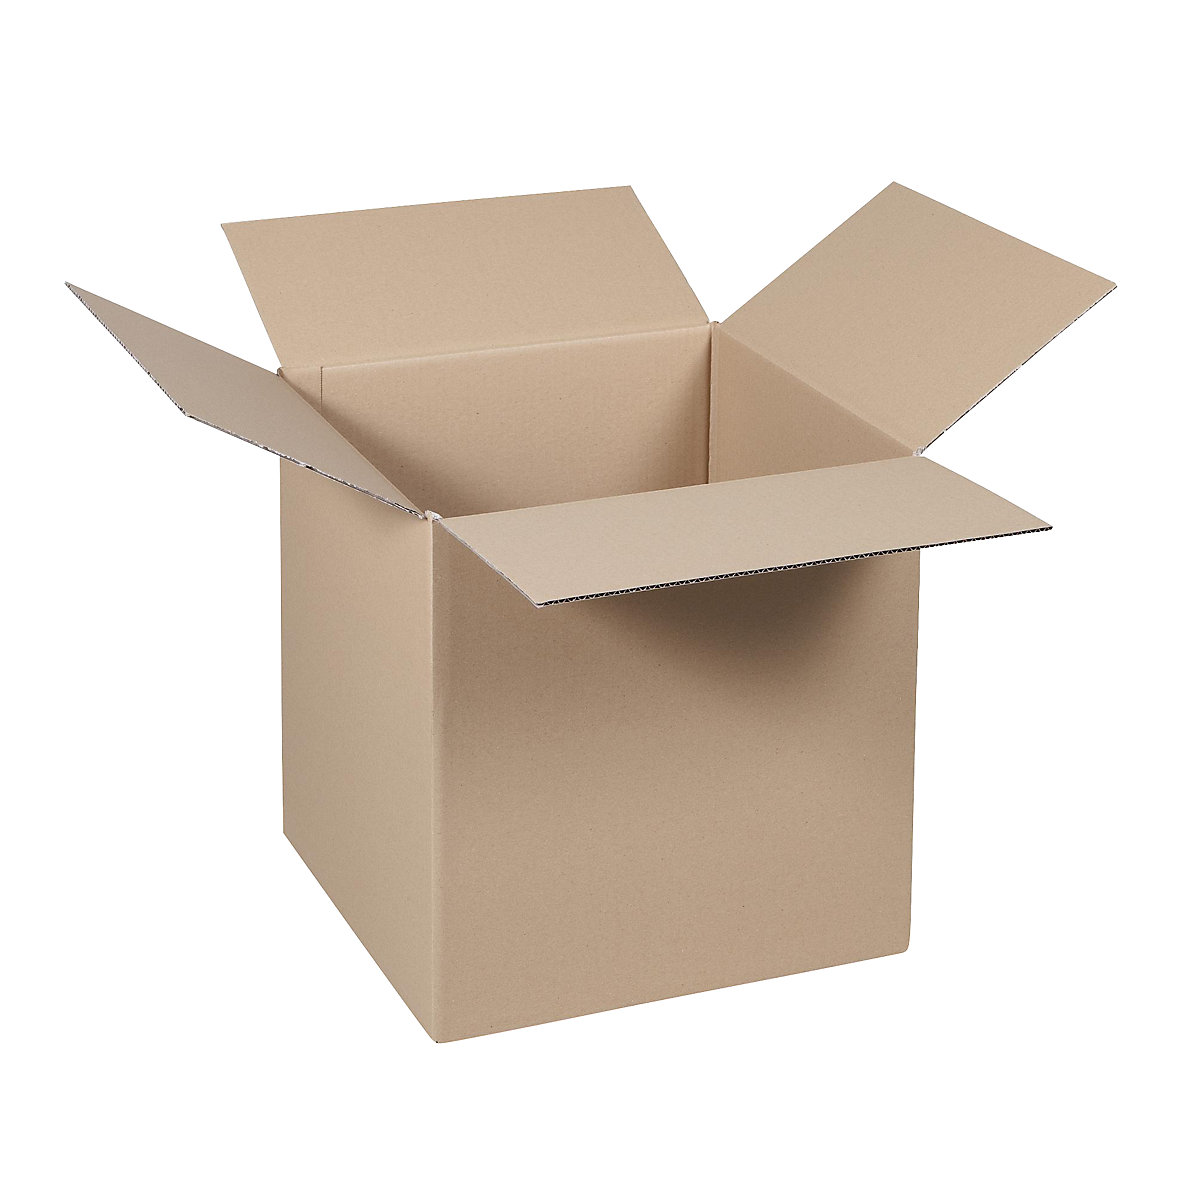 Folding cardboard box, FEFCO 0201, made of single fluted cardboard, internal dimensions 400 x 400 x 300 mm, pack of 100-28